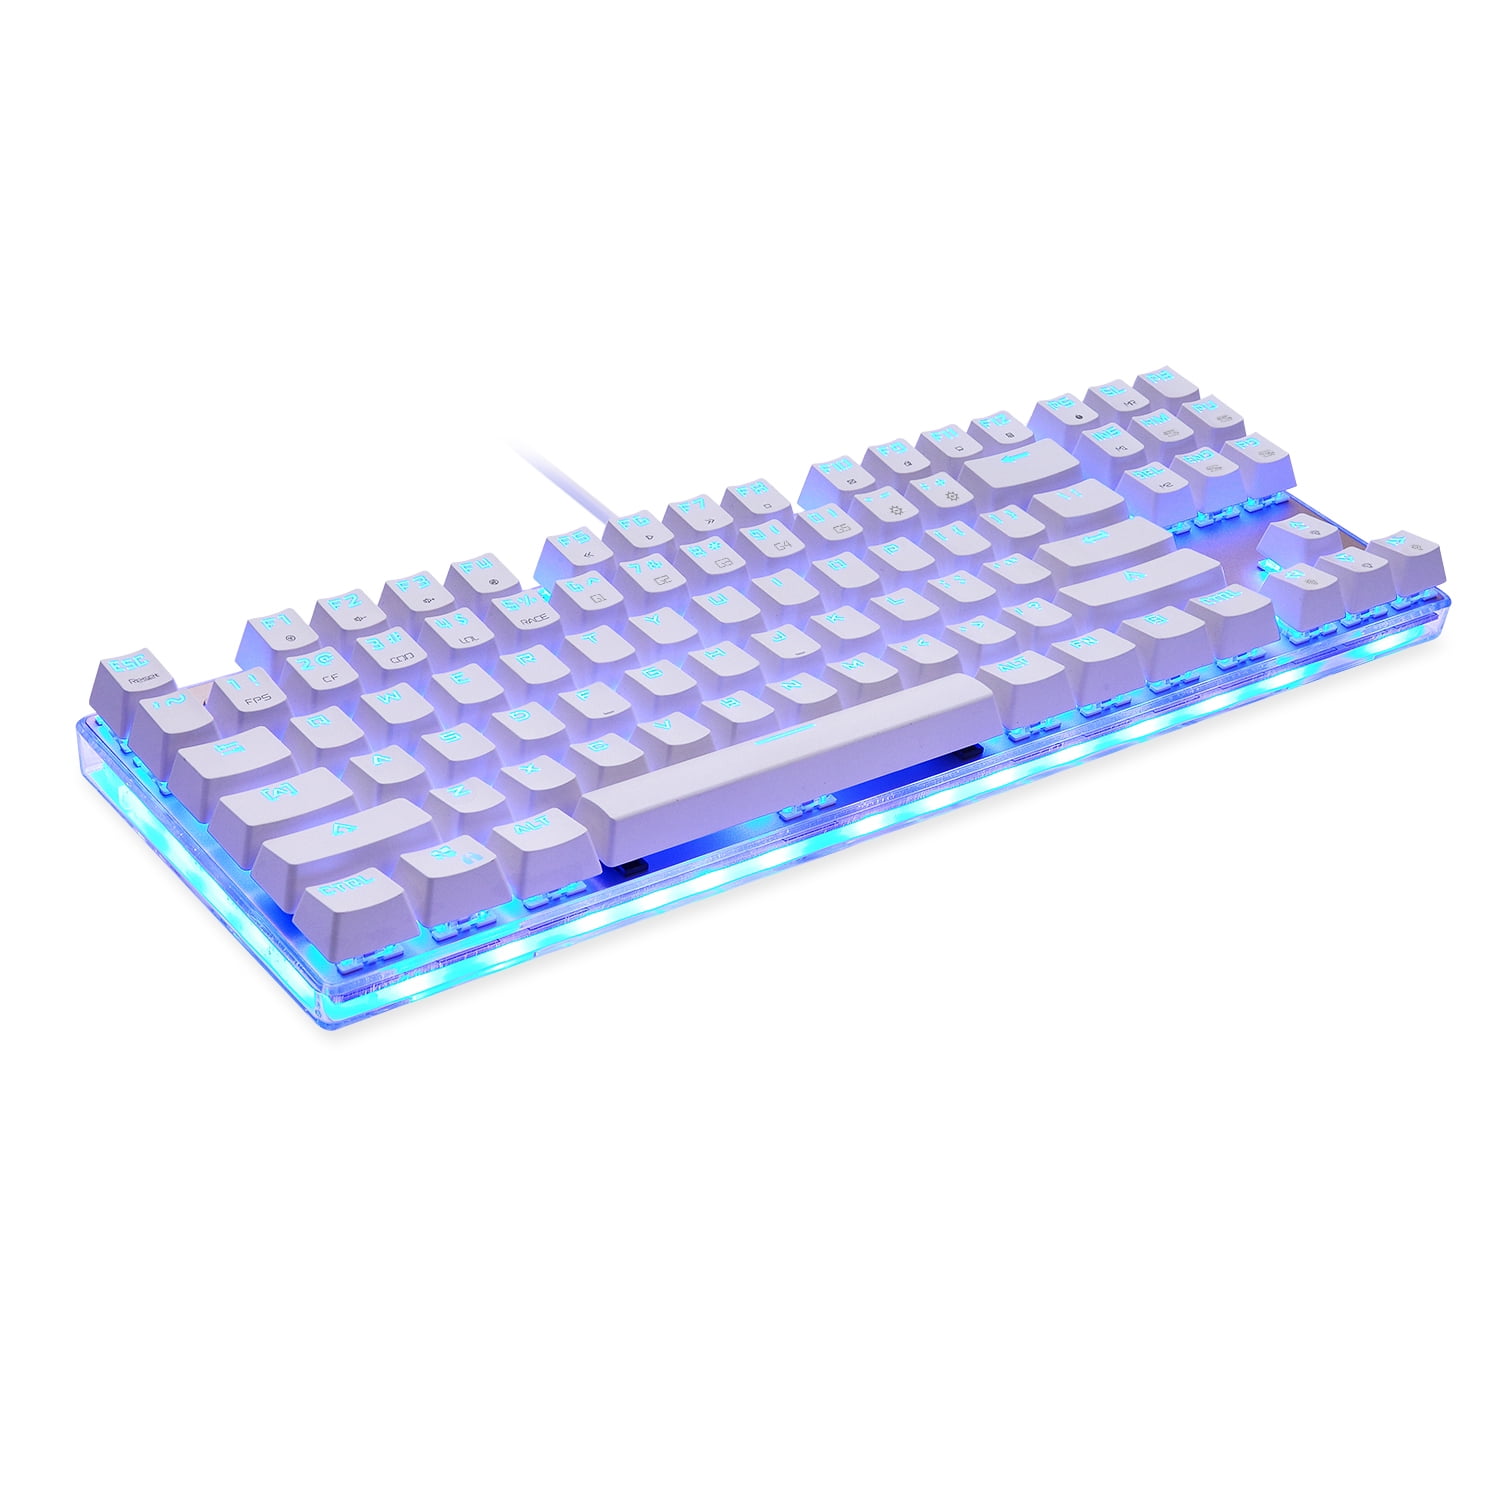 MOTOSPEED K87S Mechanical Keyboard Gaming Keyboard Wired USB Customized LED RGB  Backlit with 87 Keys